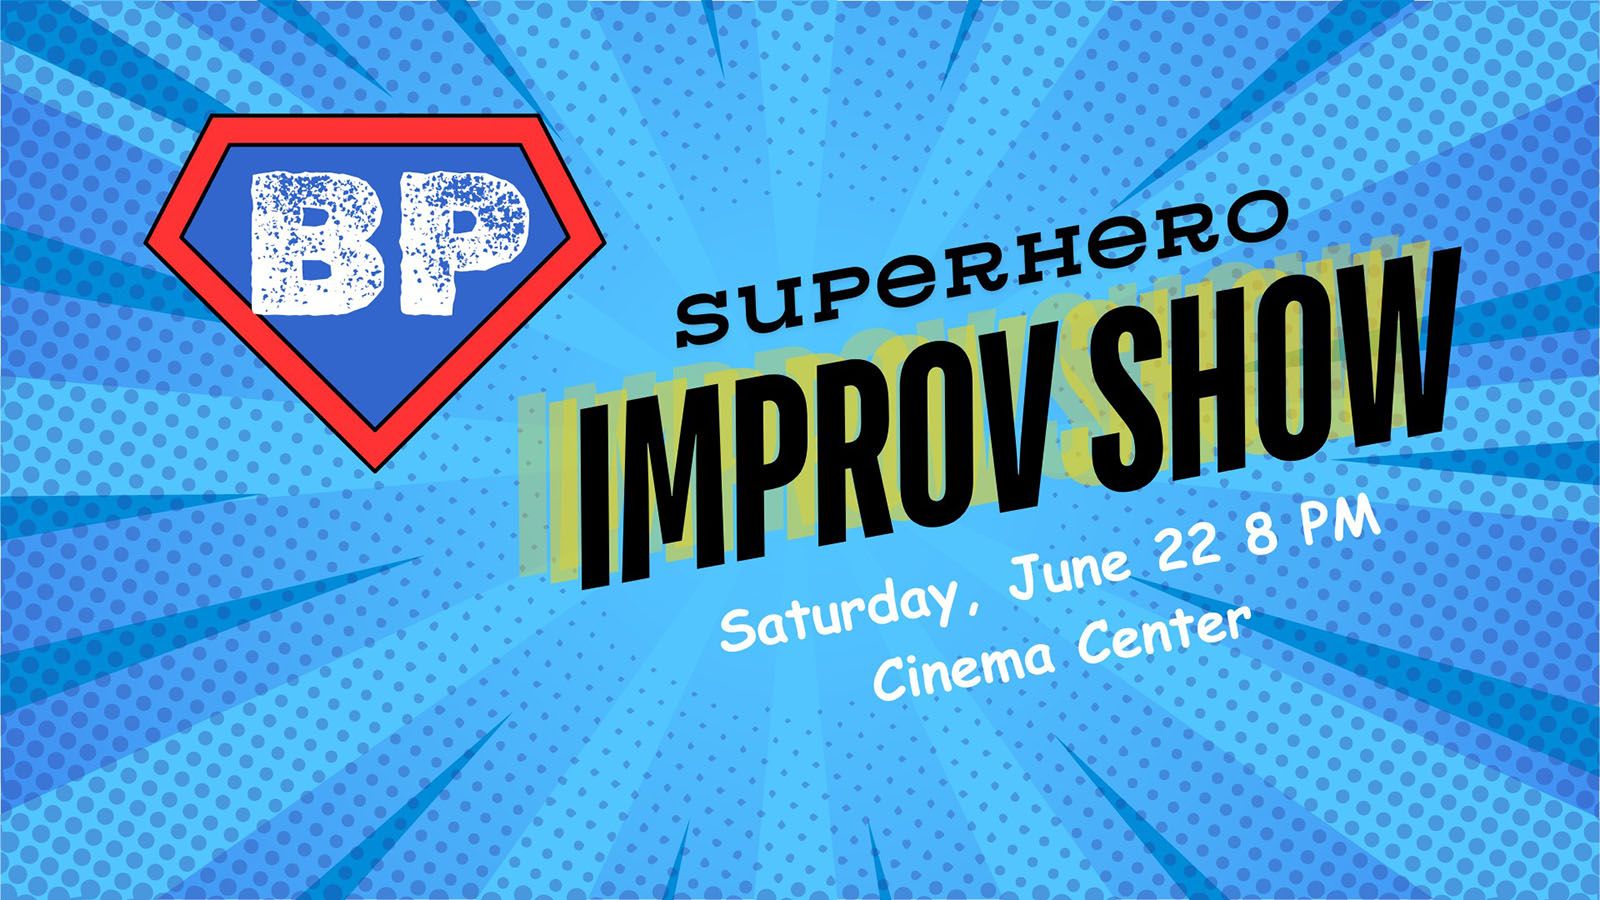 Broken Pencil will present their Superhero Improv Show on June 22 at Cinema Center.